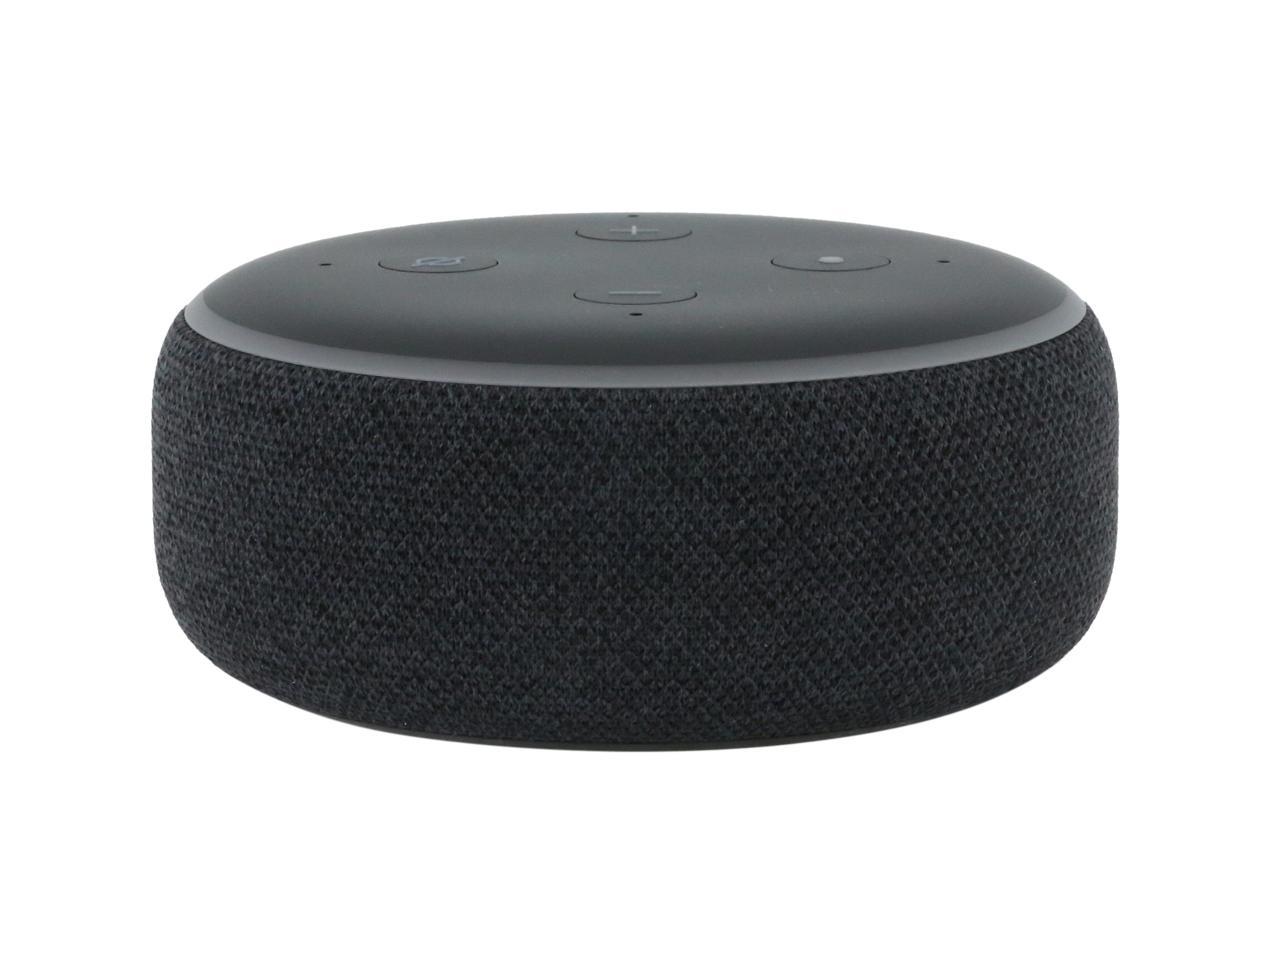 Sandstone Smart Speaker with Alexa Amazon Echo Dot 3rd Generation 